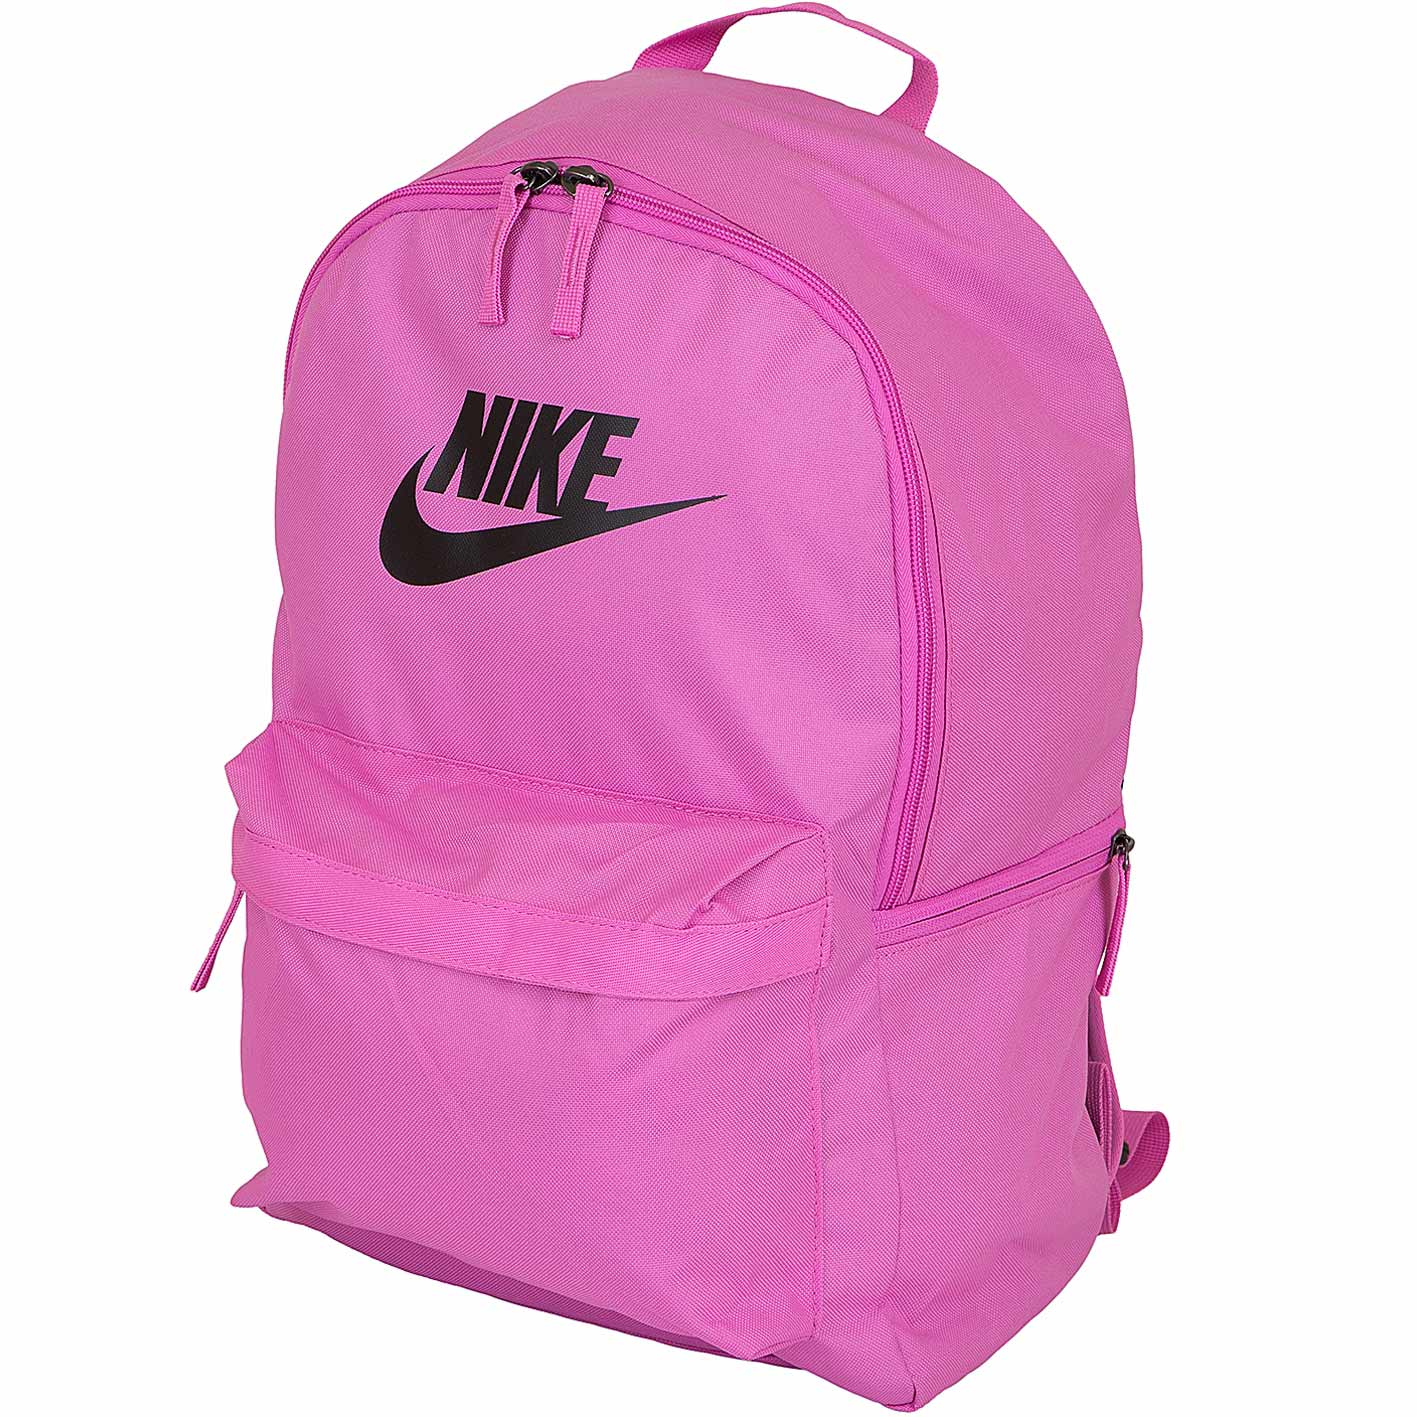 ☆ Nike Rucksack Heritage 2.0 pink/schwarz - hier bestellen!